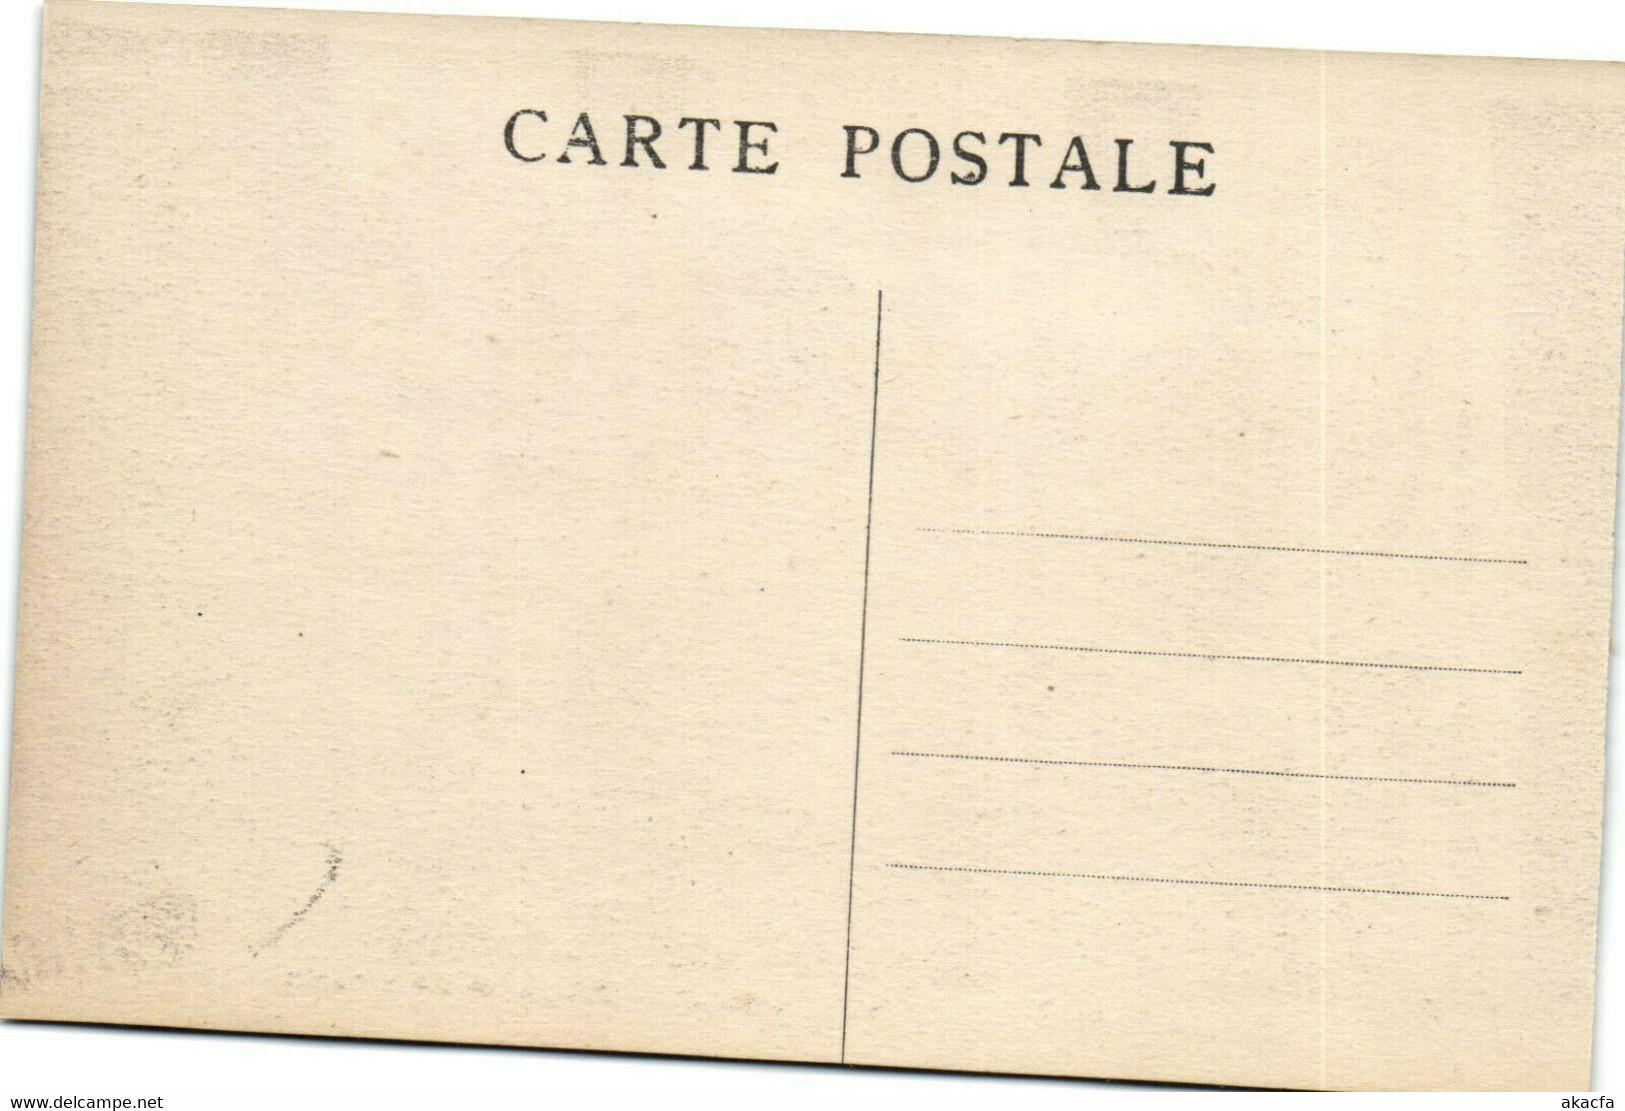 PC UK, SALOMON ISLANDS, PARURES DE FÉTE, Vintage Postcard (b33520) - Salomoninseln